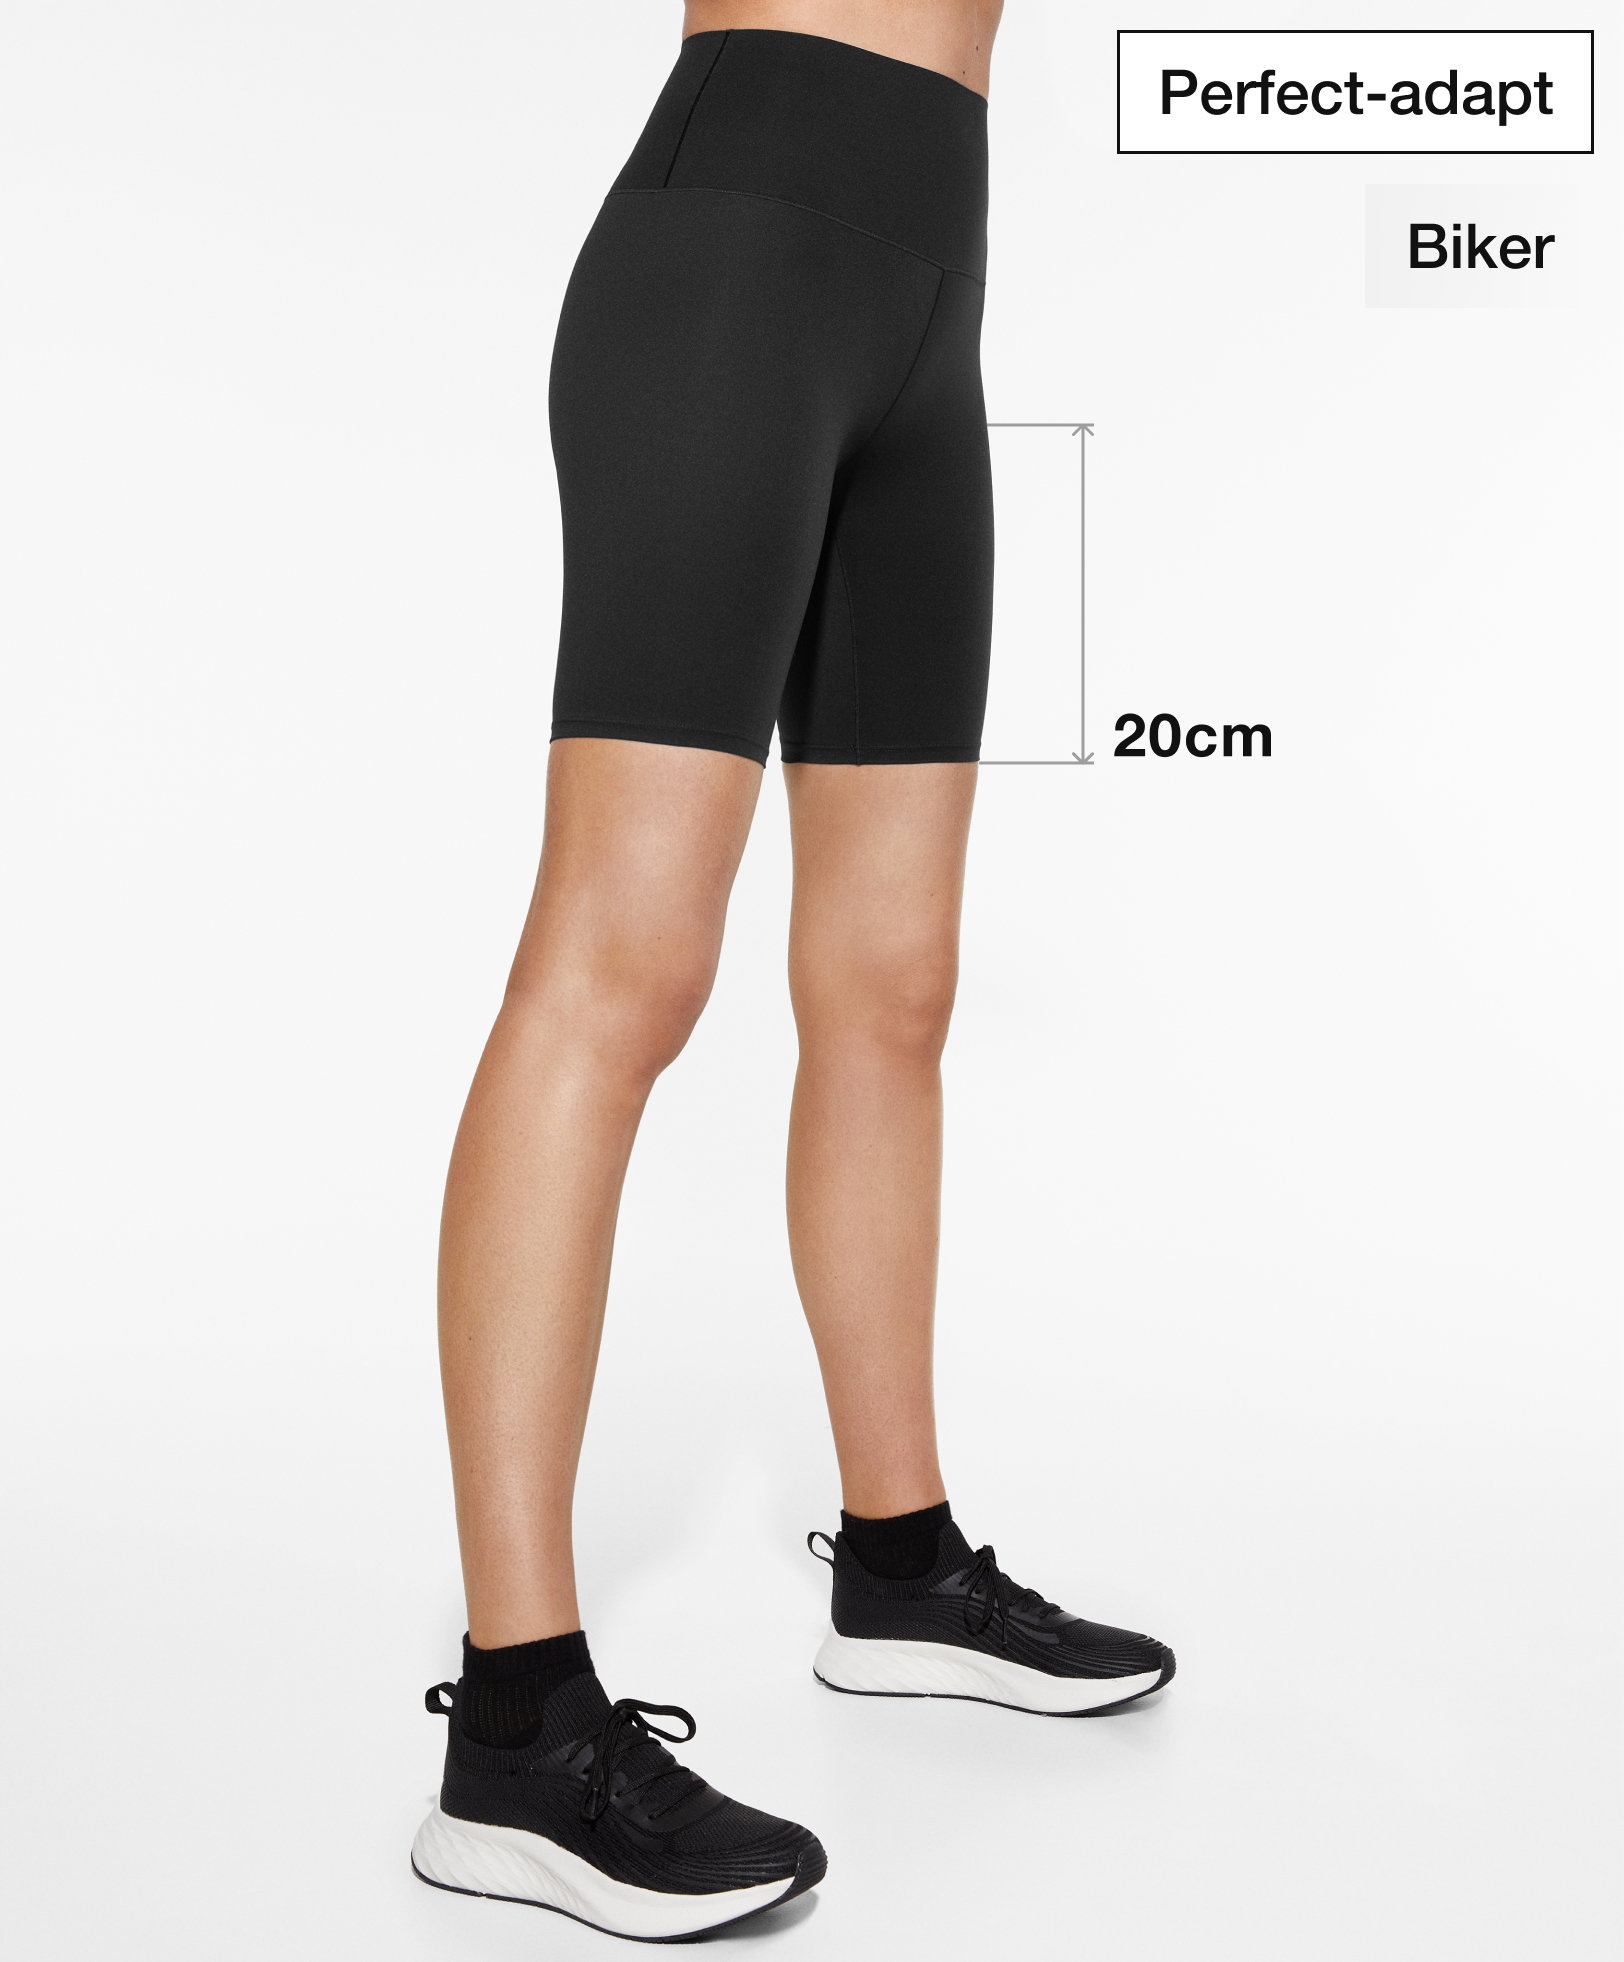 Leggings cycliste high rise perfect-adapt 20 cm